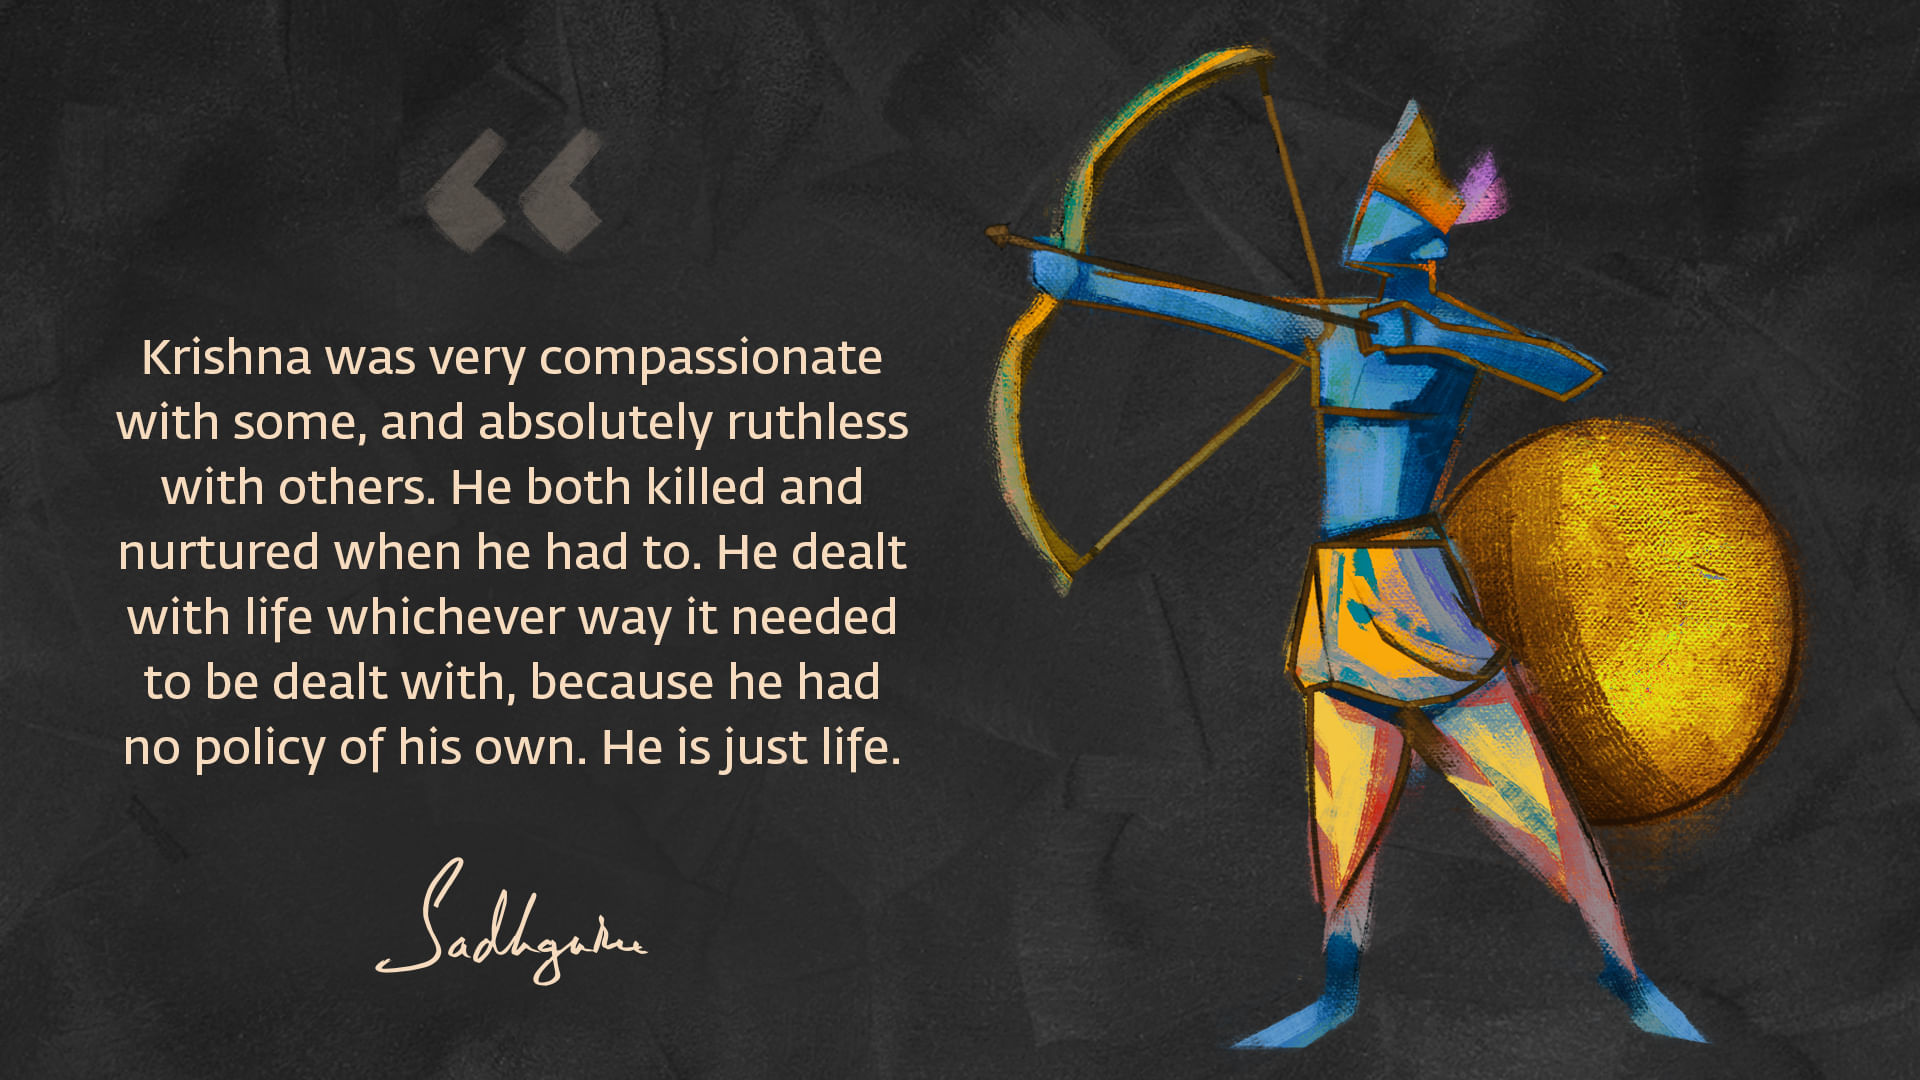 Krishna quote from Sadhguru with abstract Krishna shooting an arrow.